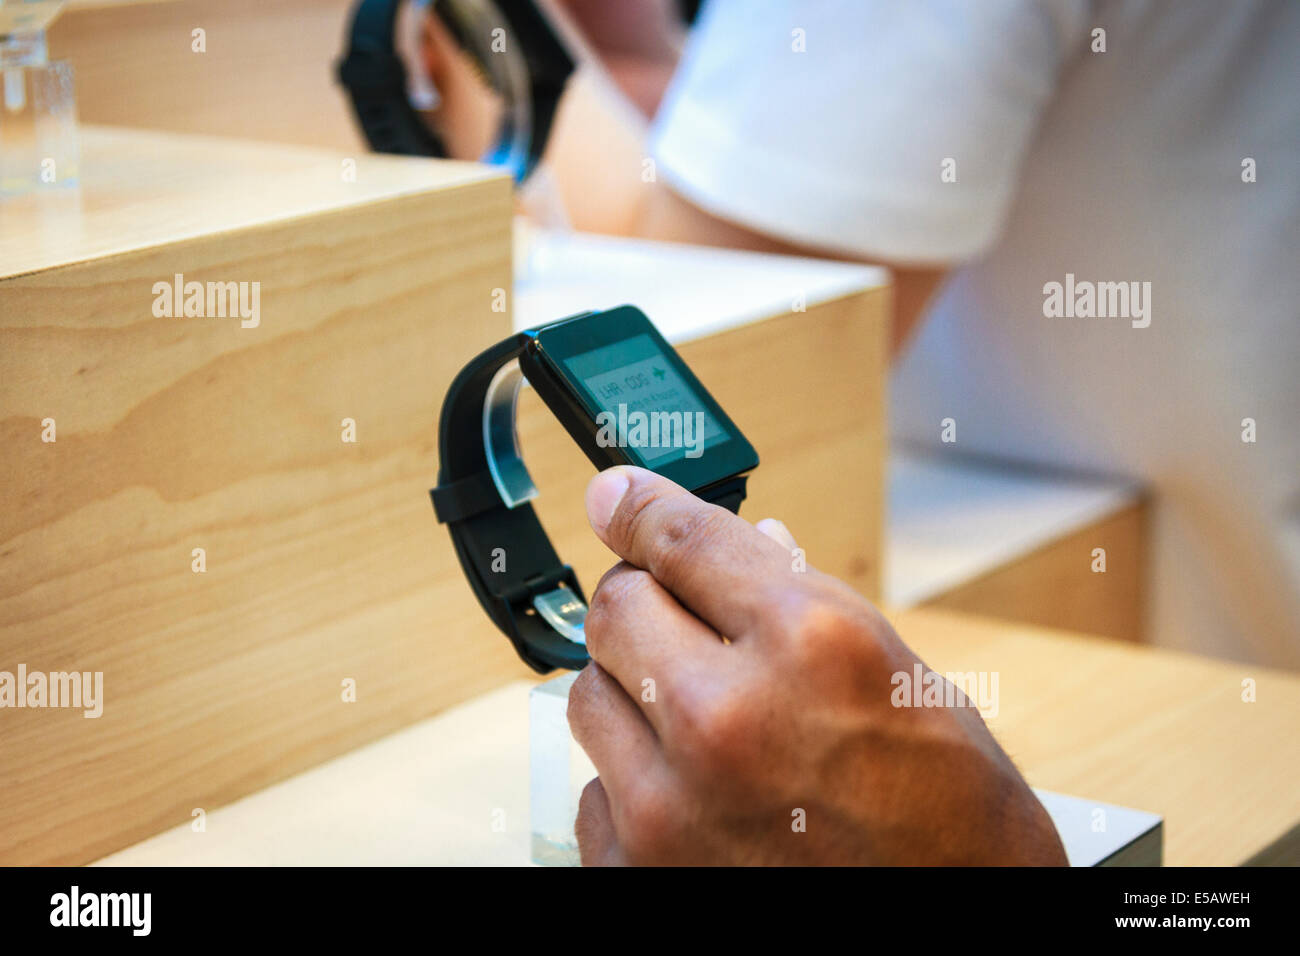 Maschio lato toccando Samsung Gear Live smartwatch wearable technology in un display a Google I/O conferenza in San Francisco 2014 Foto Stock